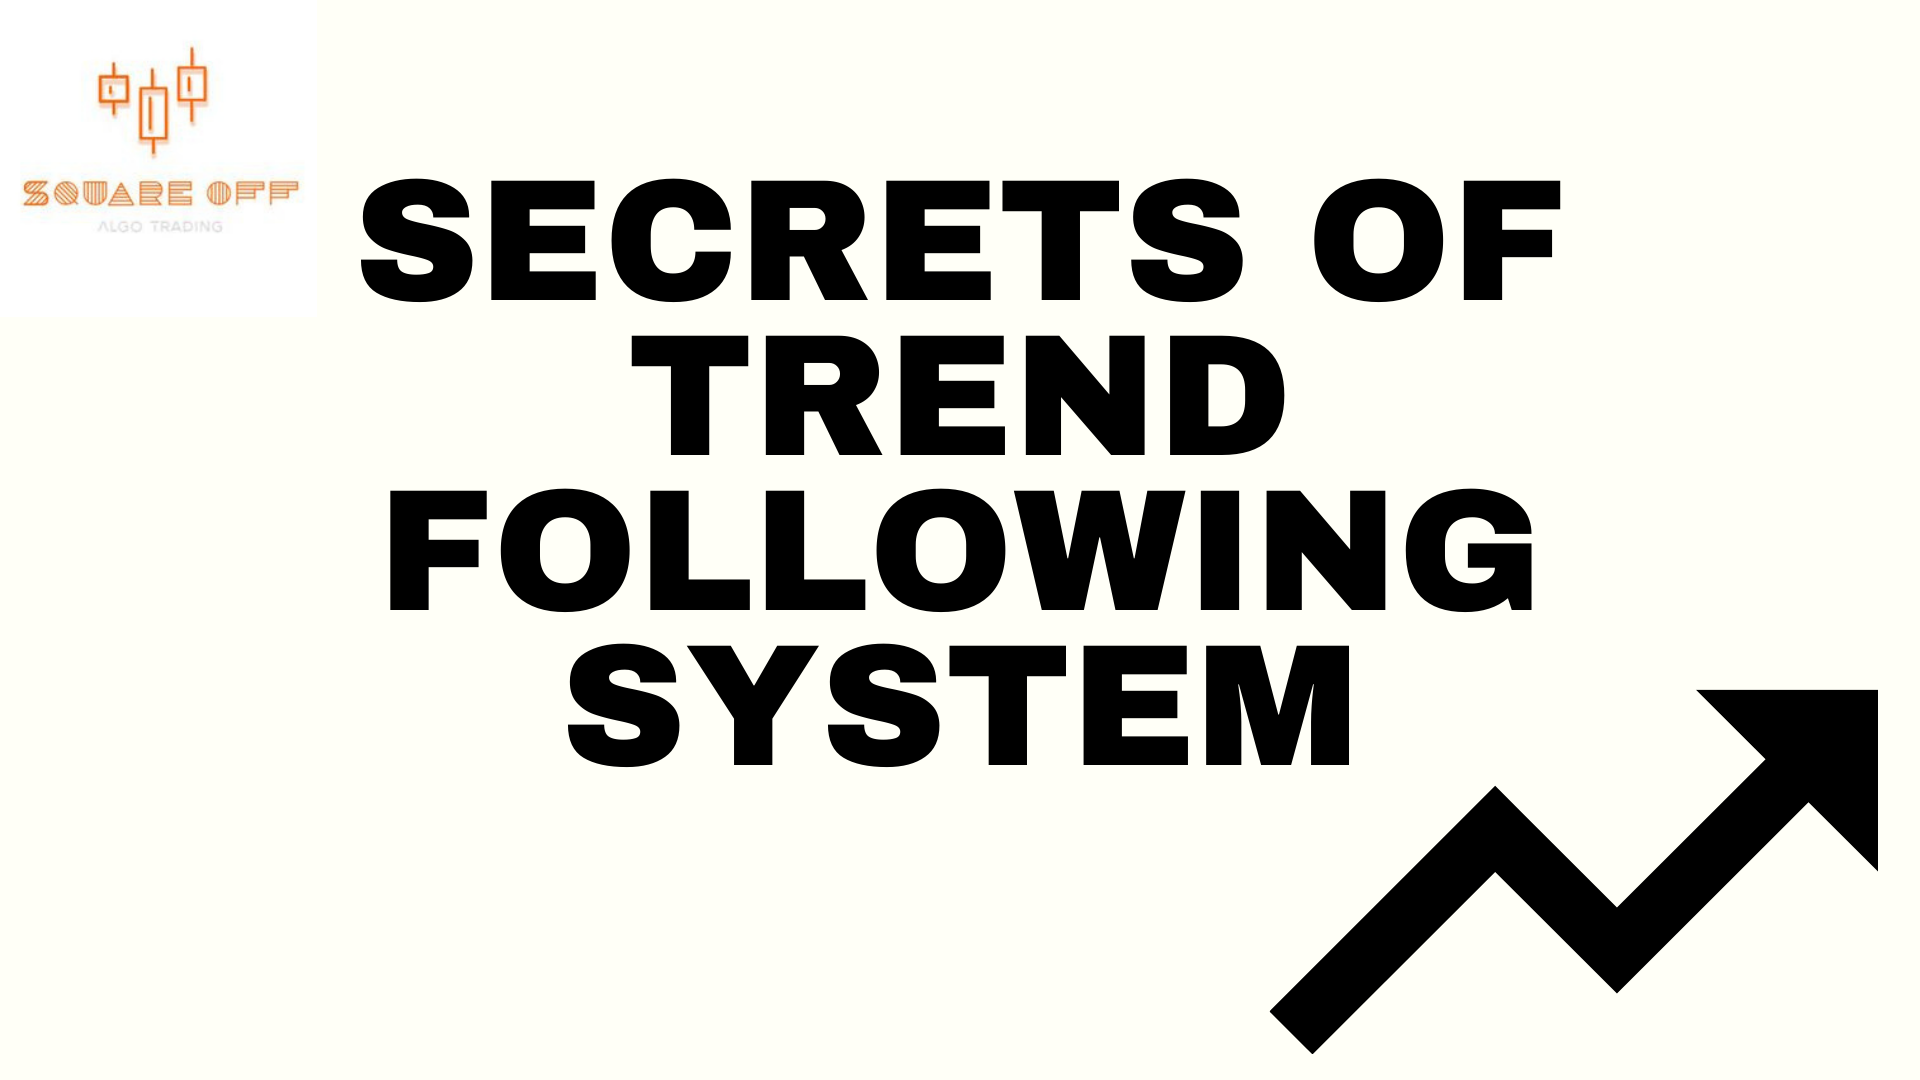 Three Secrets of Trend Following System